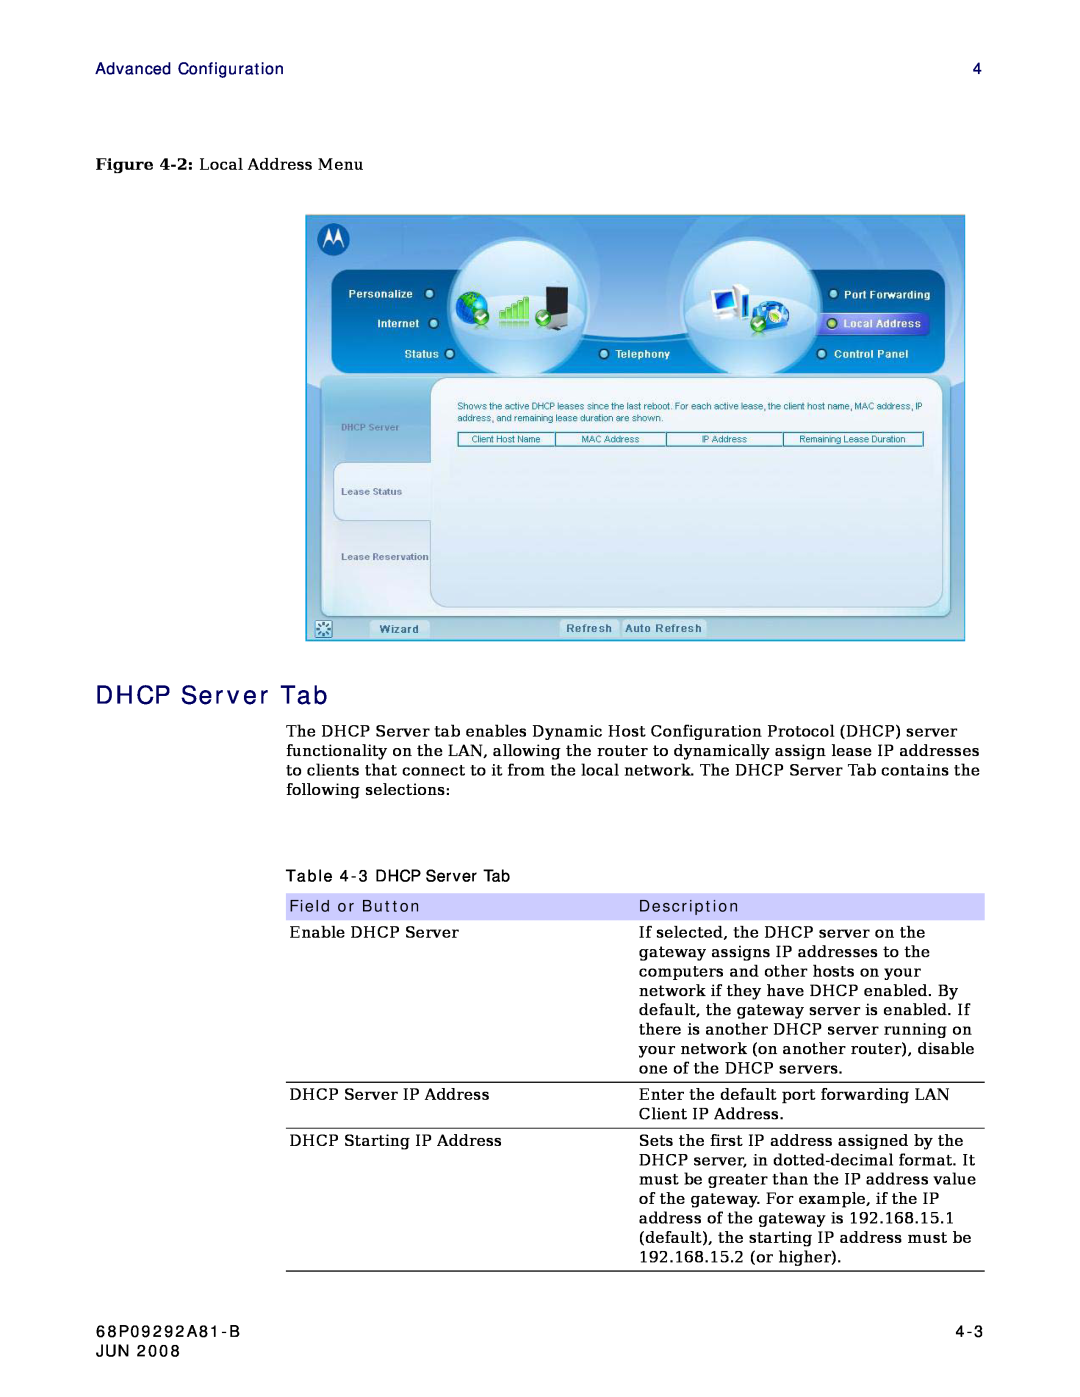 Motorola CPEI 750 manual DHCP Server Tab, Advanced Configuration, Field or Button, Description, 68P09292A81-B 